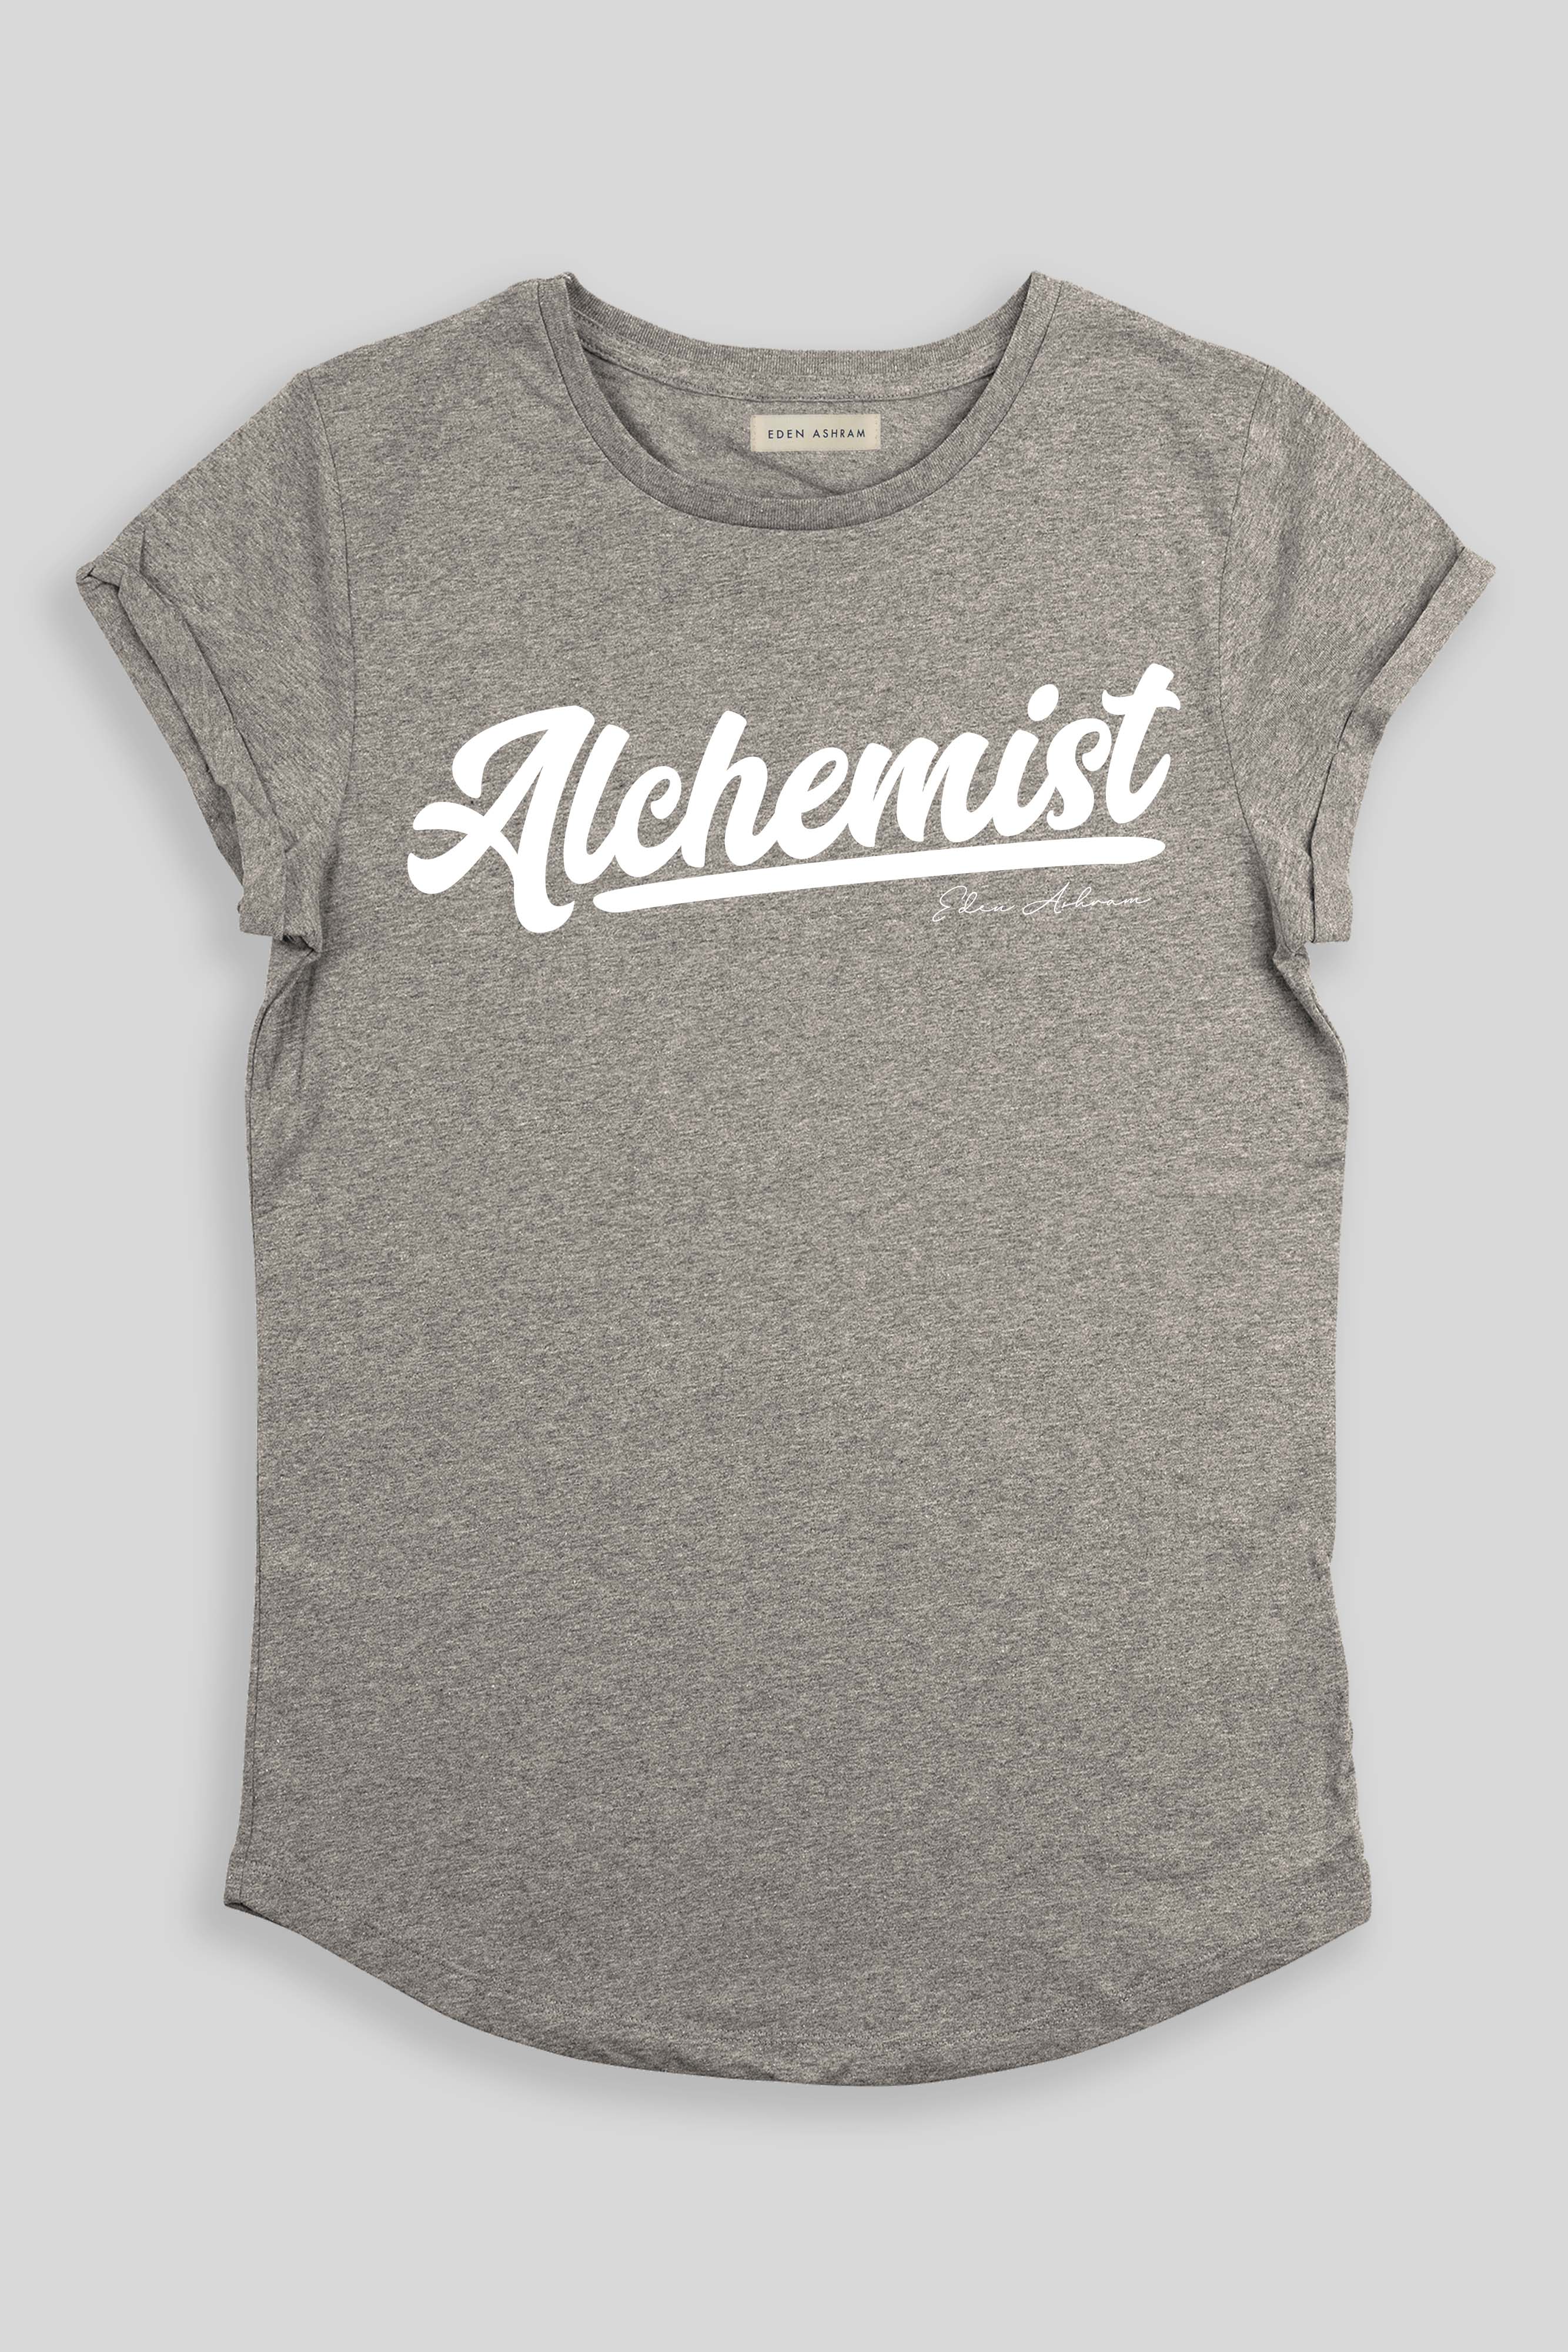 EDEN ASHRAM Alchemist Organic Rolled Sleeve T-Shirt Heather Grey